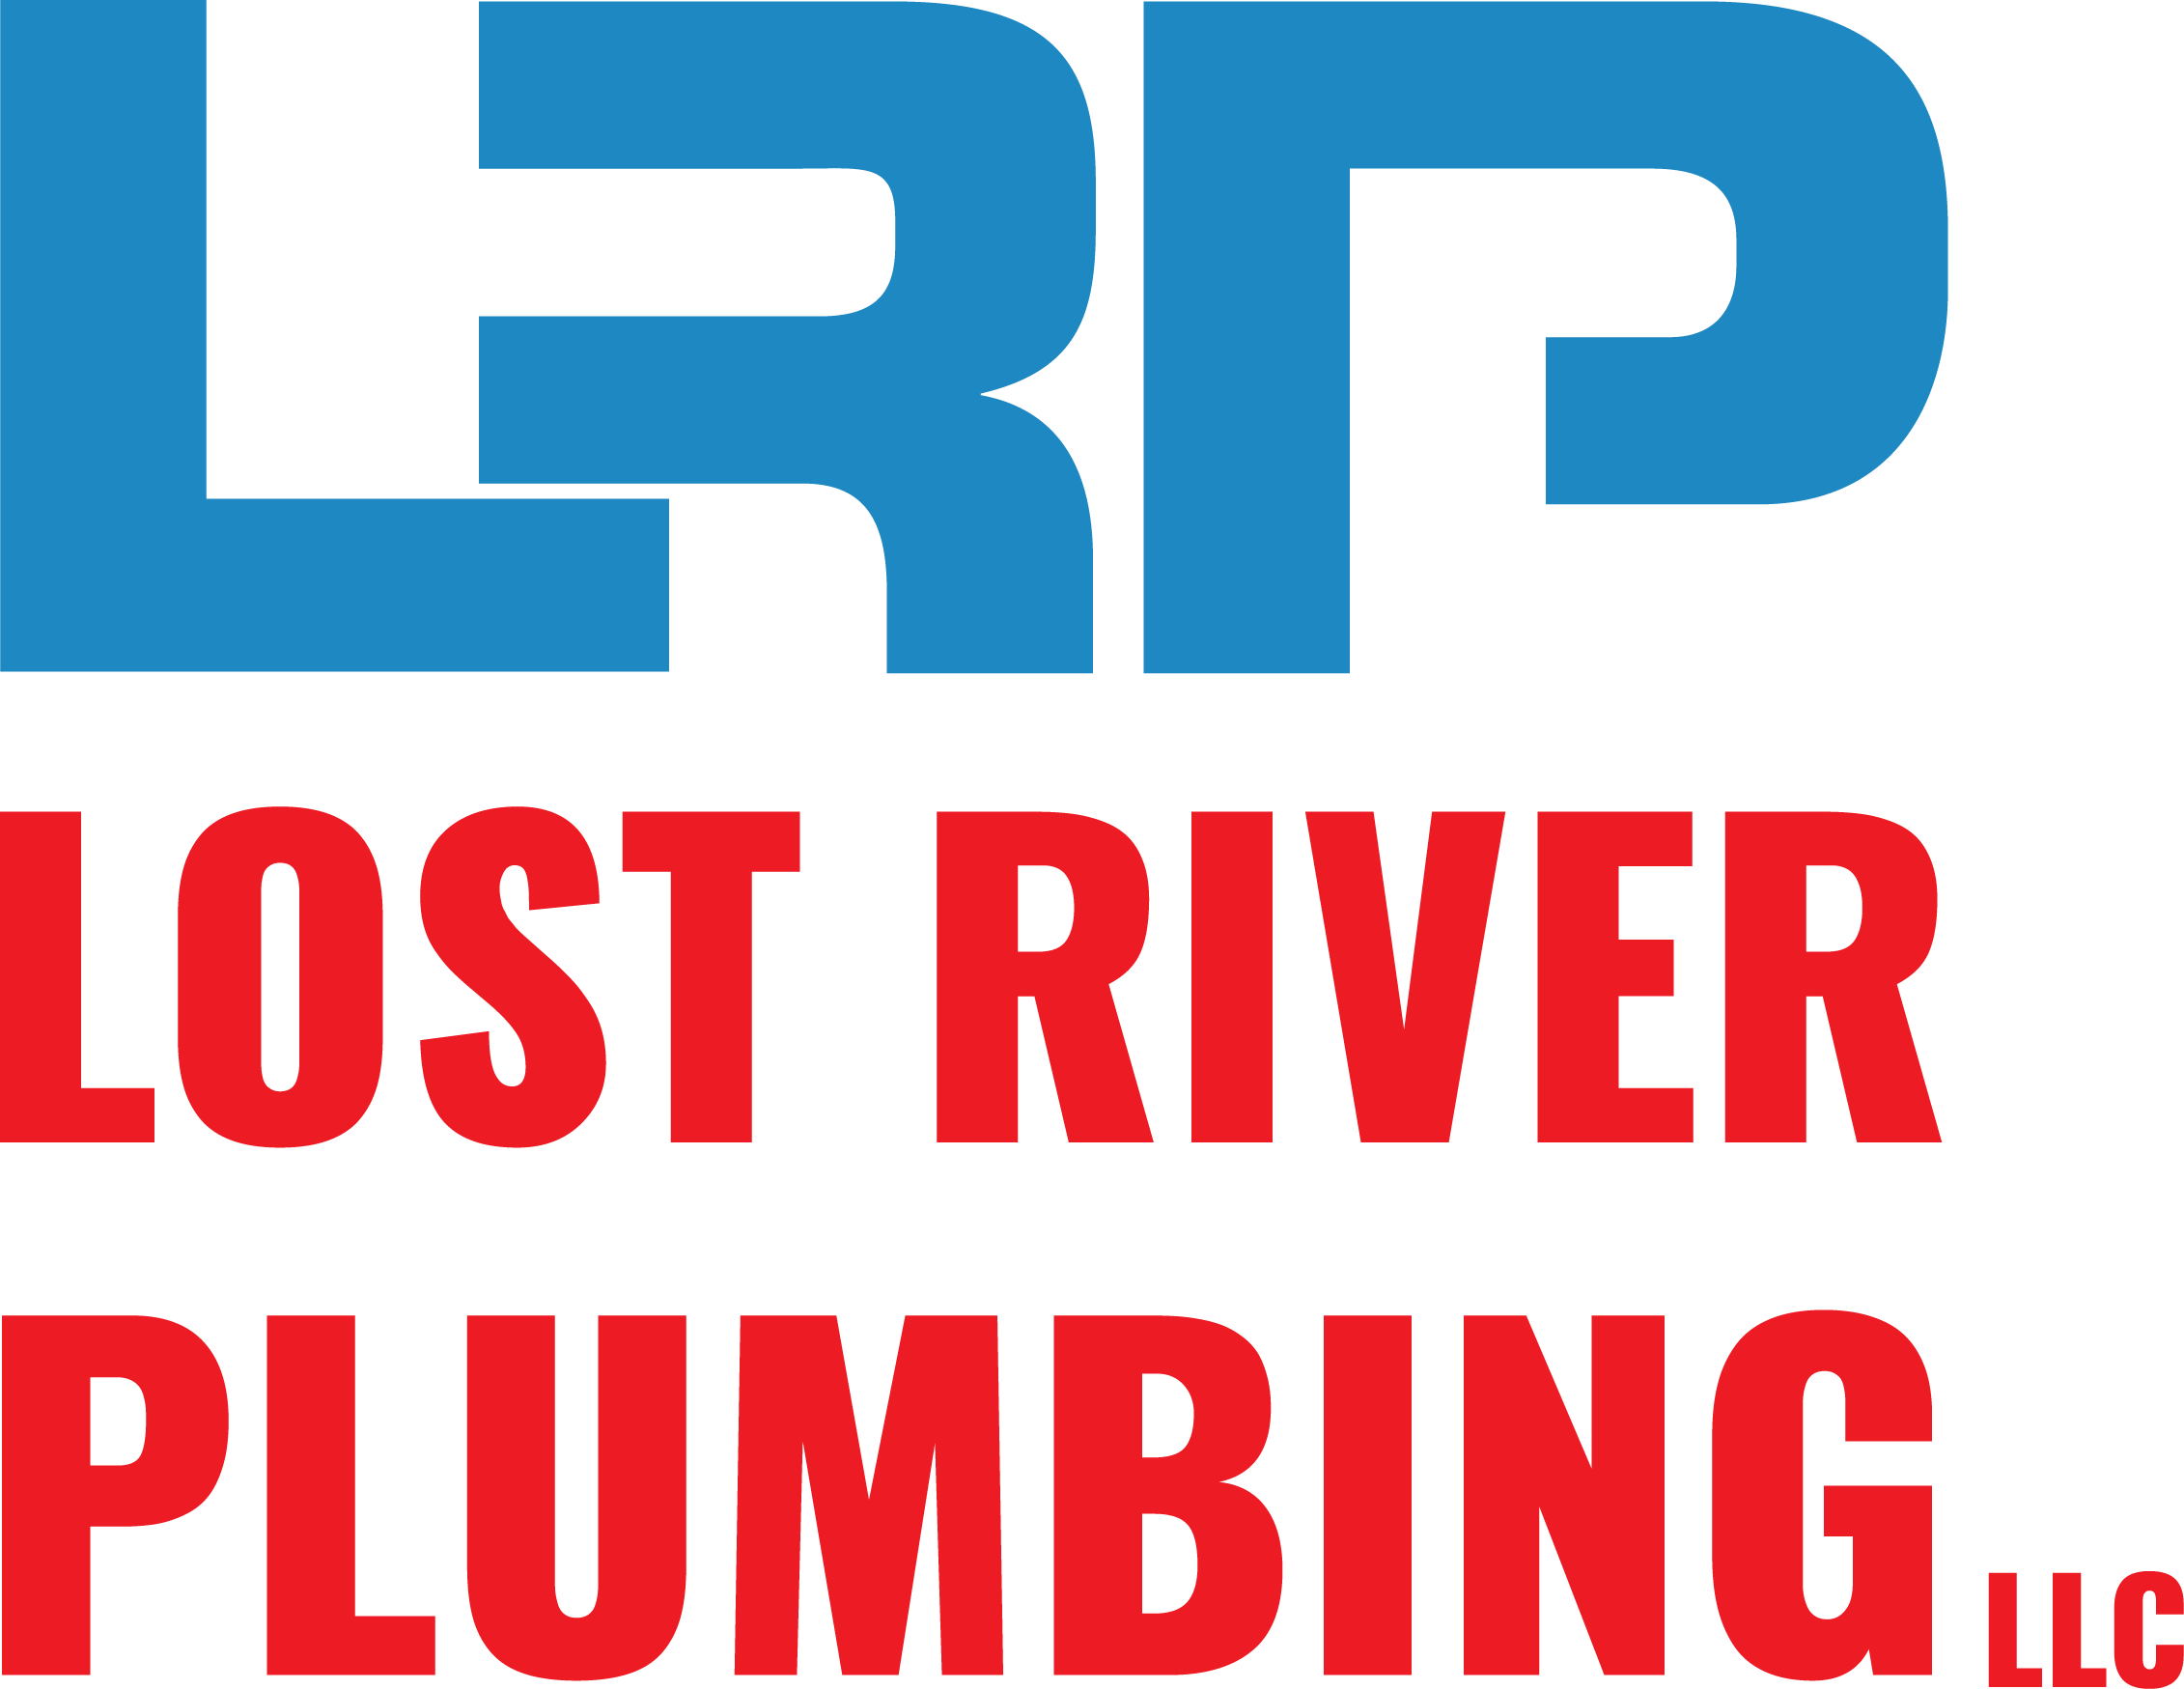 Lost River Plumbing